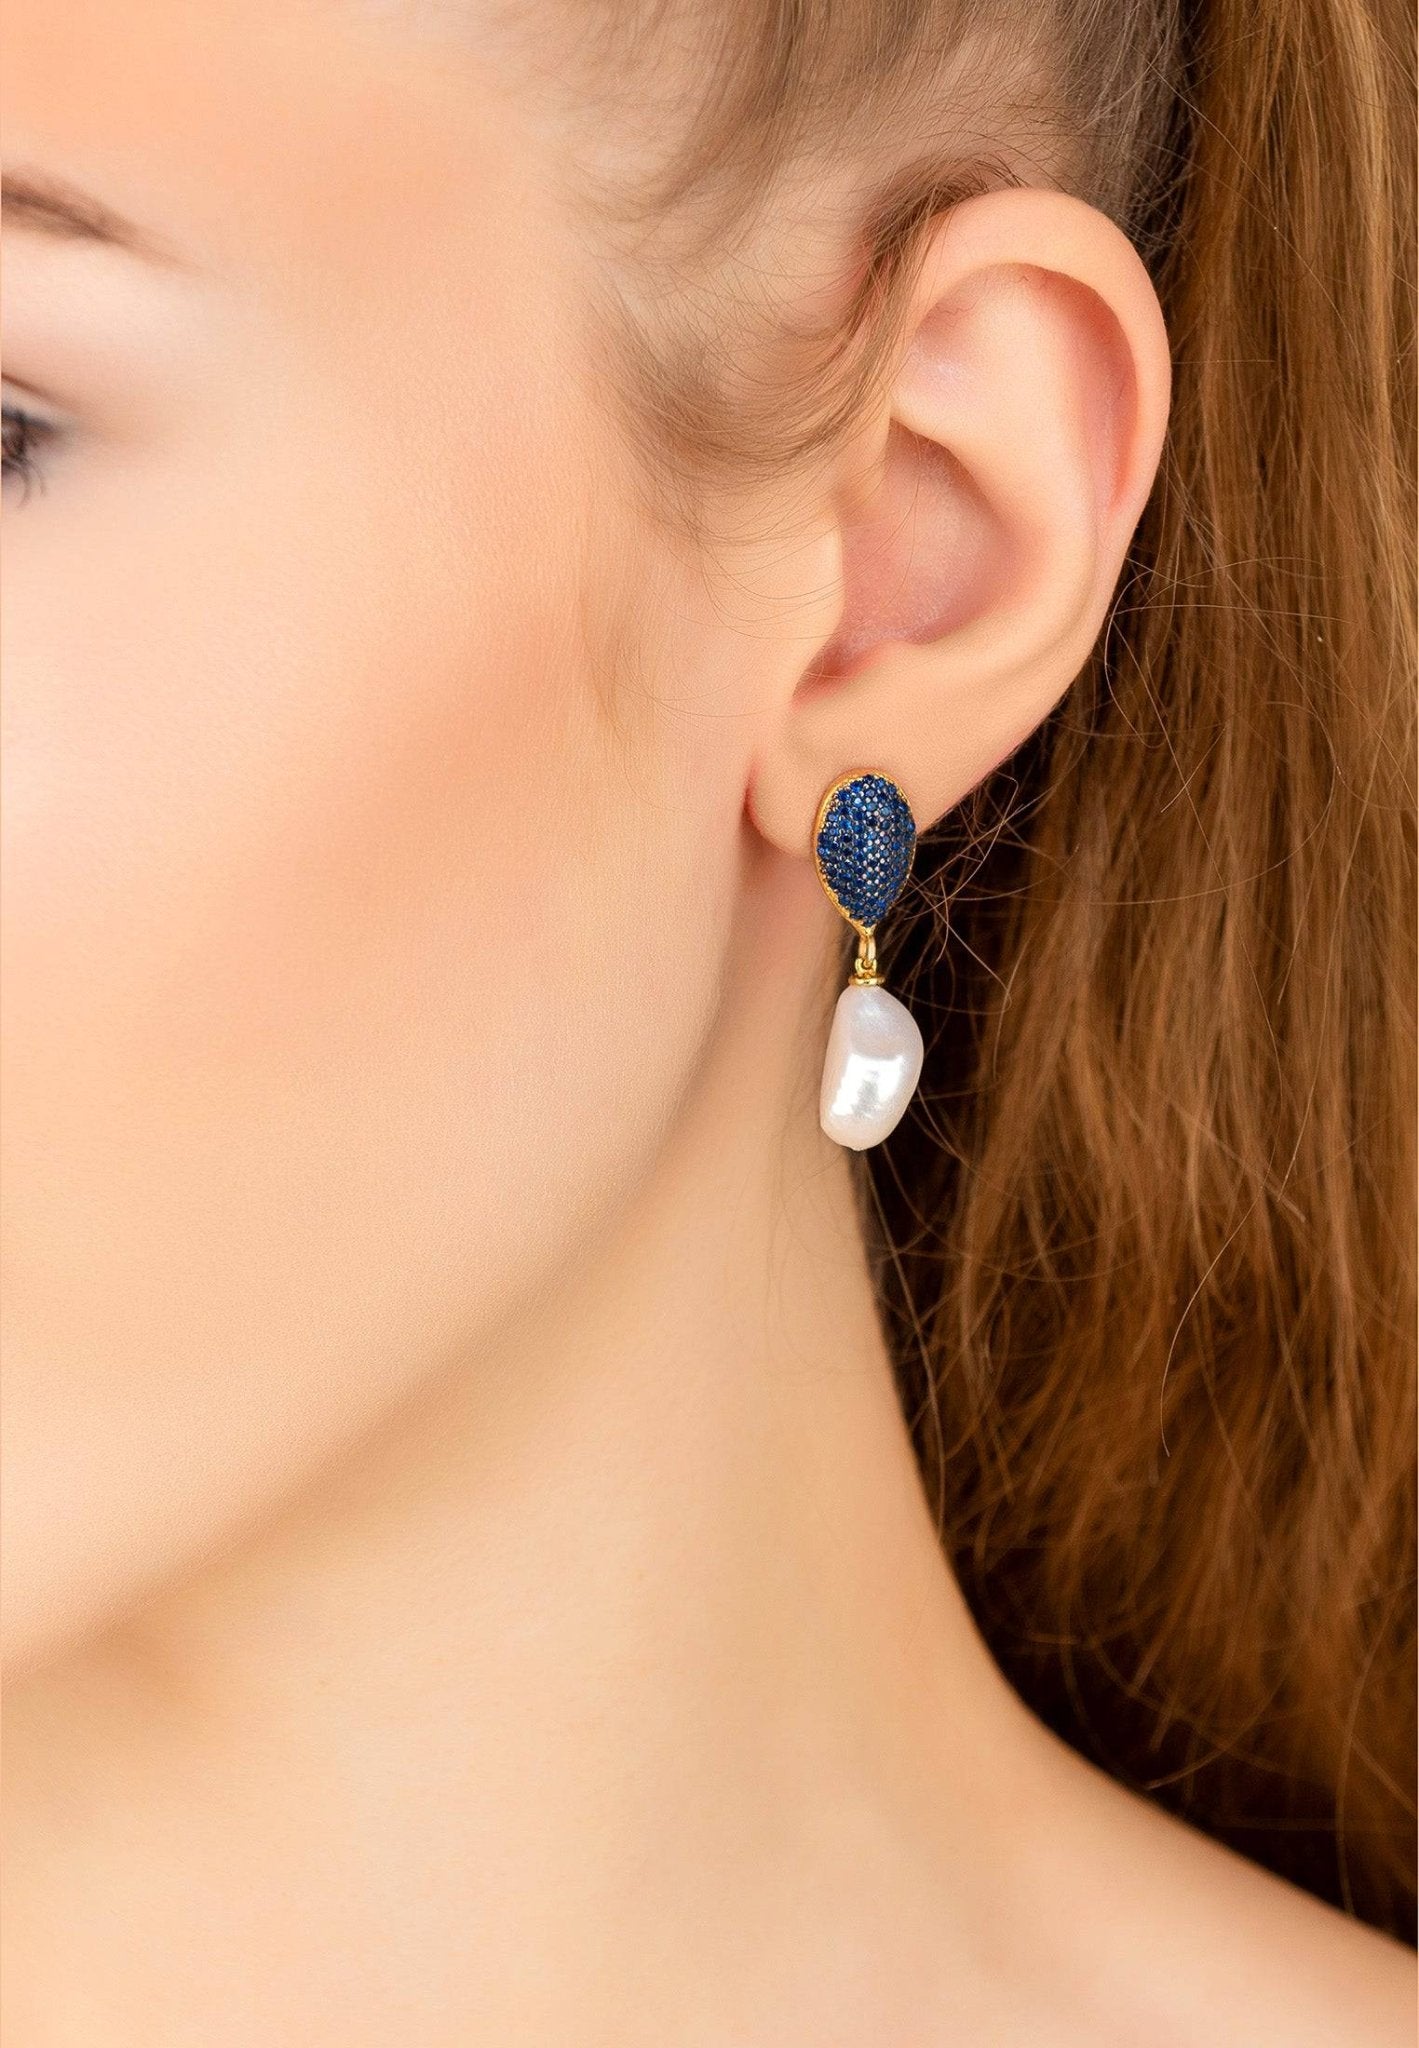 Baroque Pearl Classic Drop Earrings Gold Sapphire Blue Cz - LATELITA Earrings